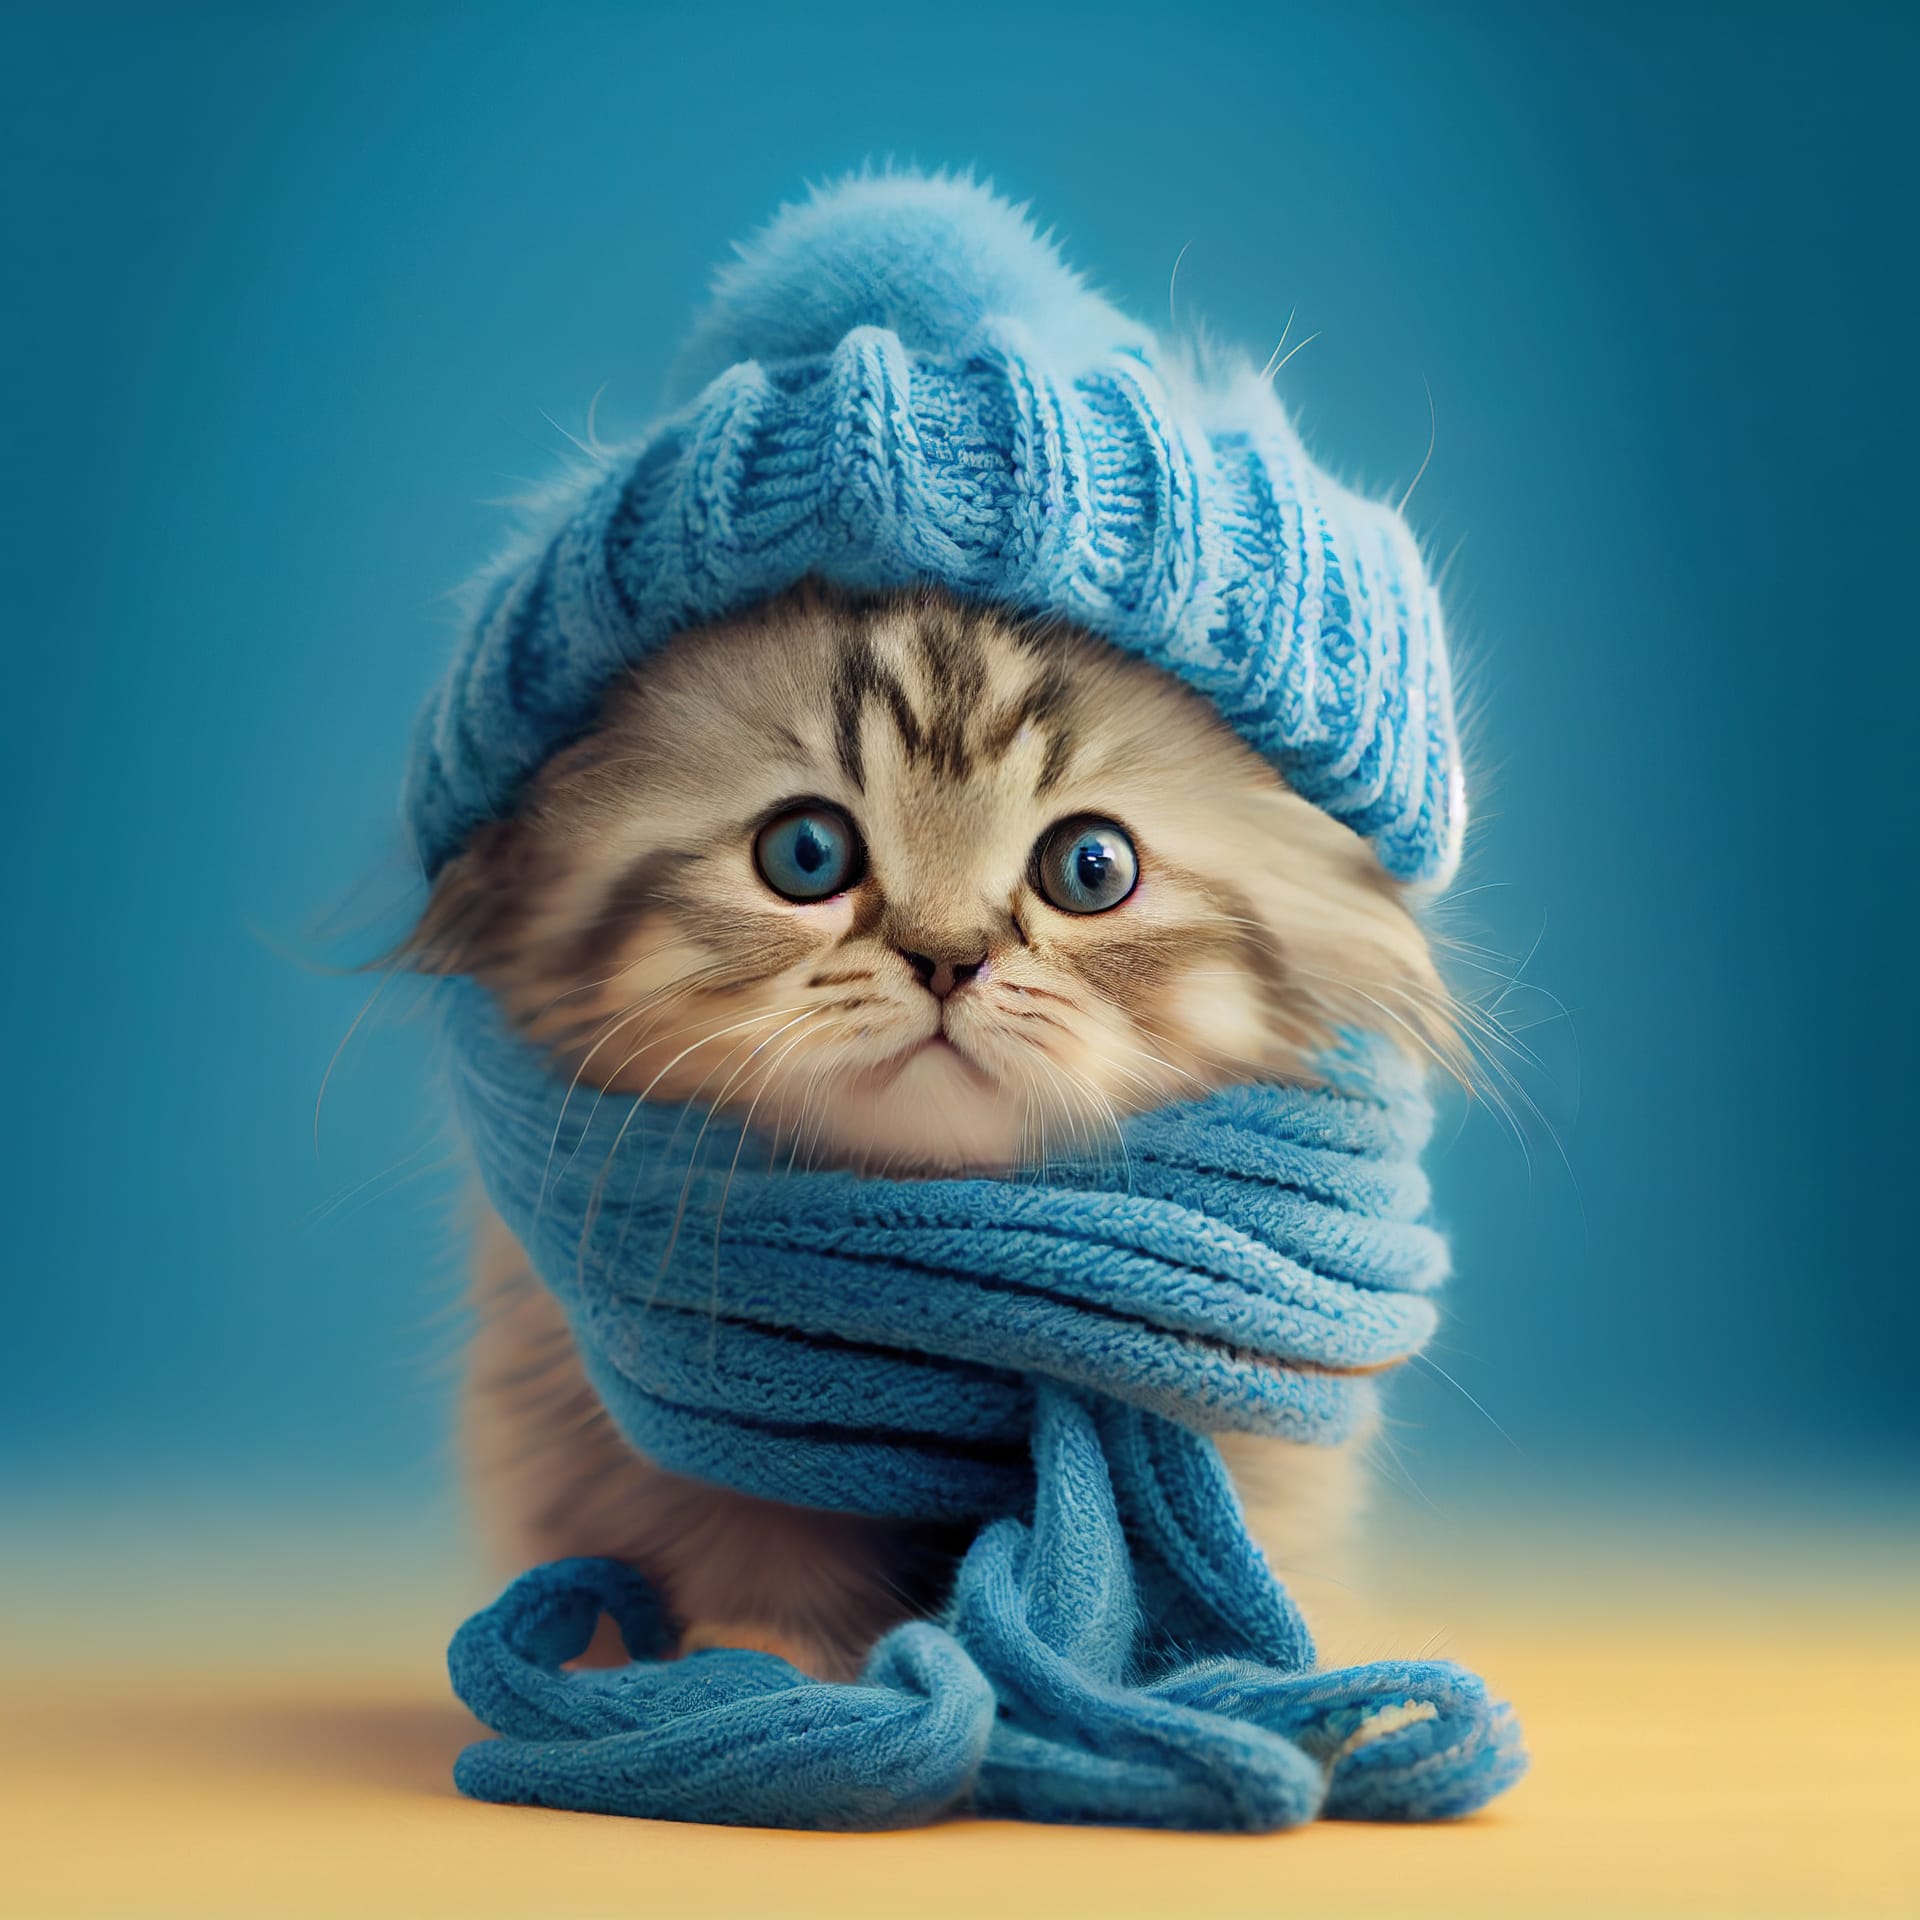 Cute kitten wearing scarf warm hat intriguing image